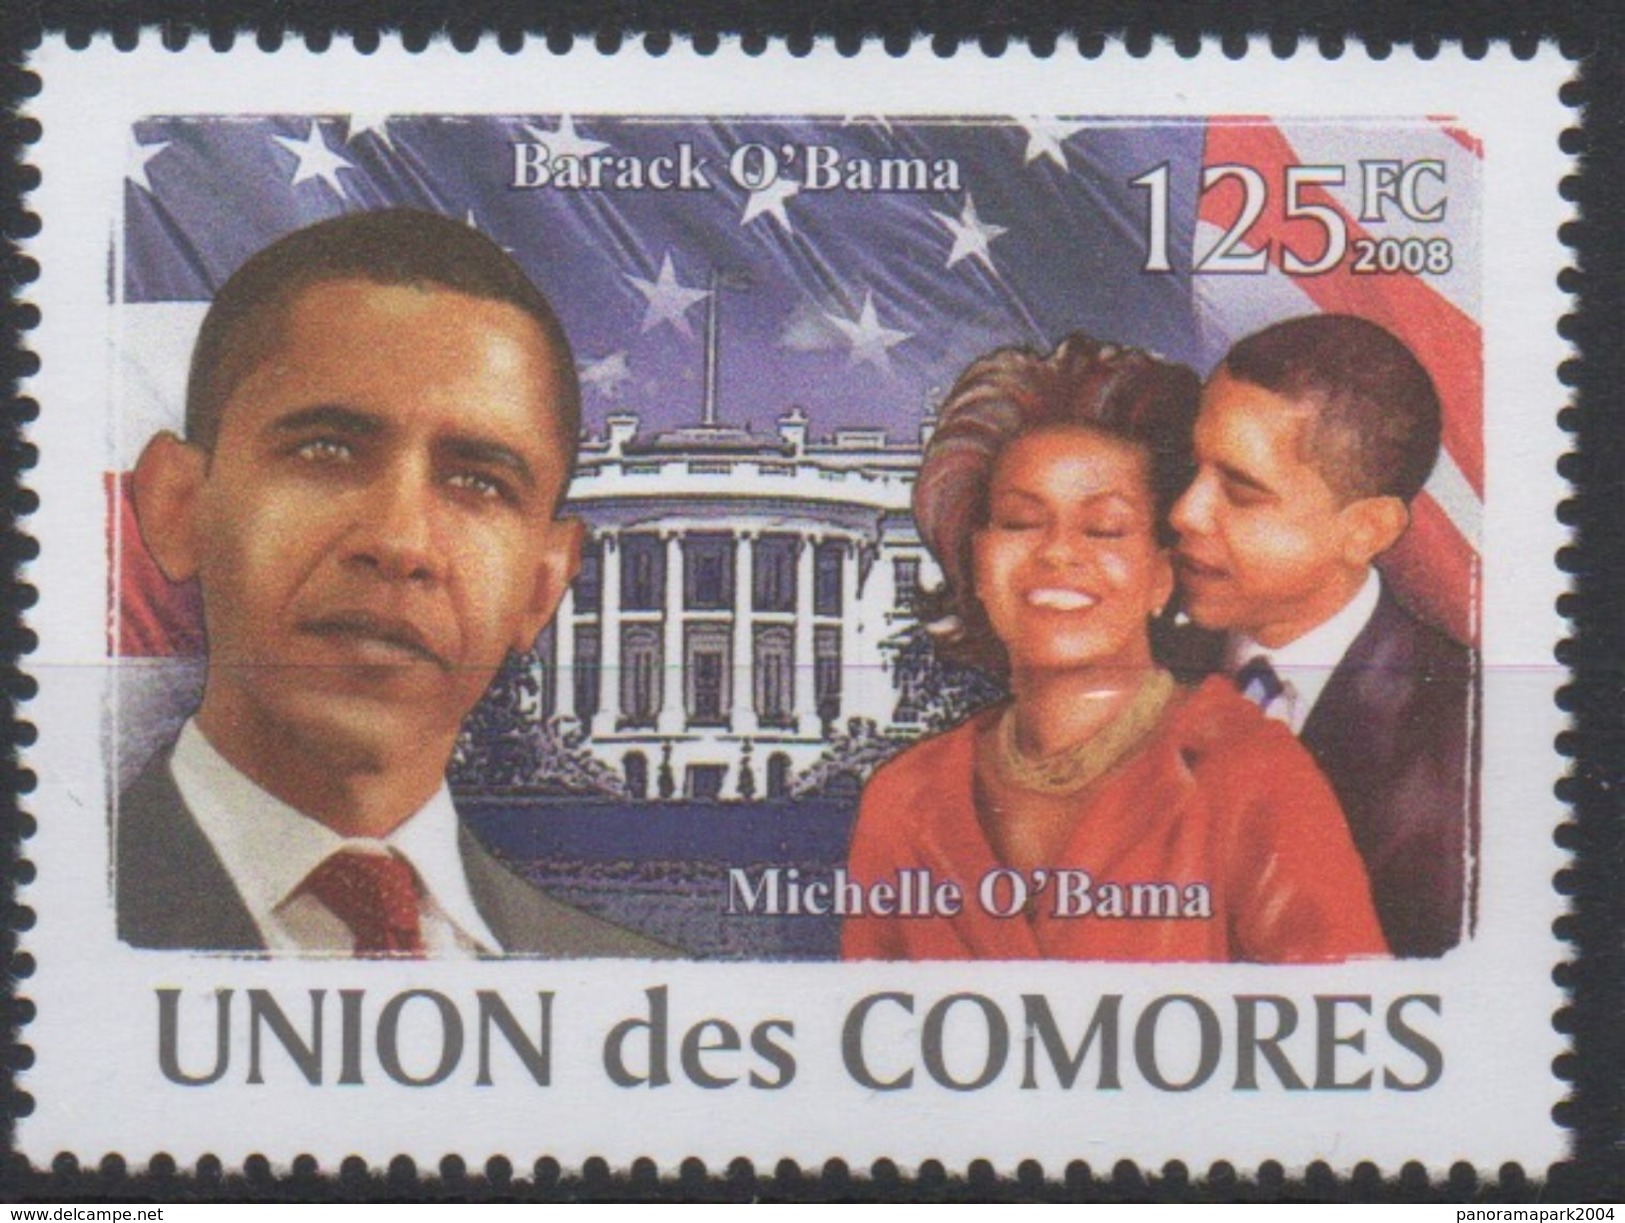 Comores Comoros Komoren 2008 USA President Barack Michelle Obama The White House US Flag Mi. I-VI Bl. I Unissued - Briefmarken